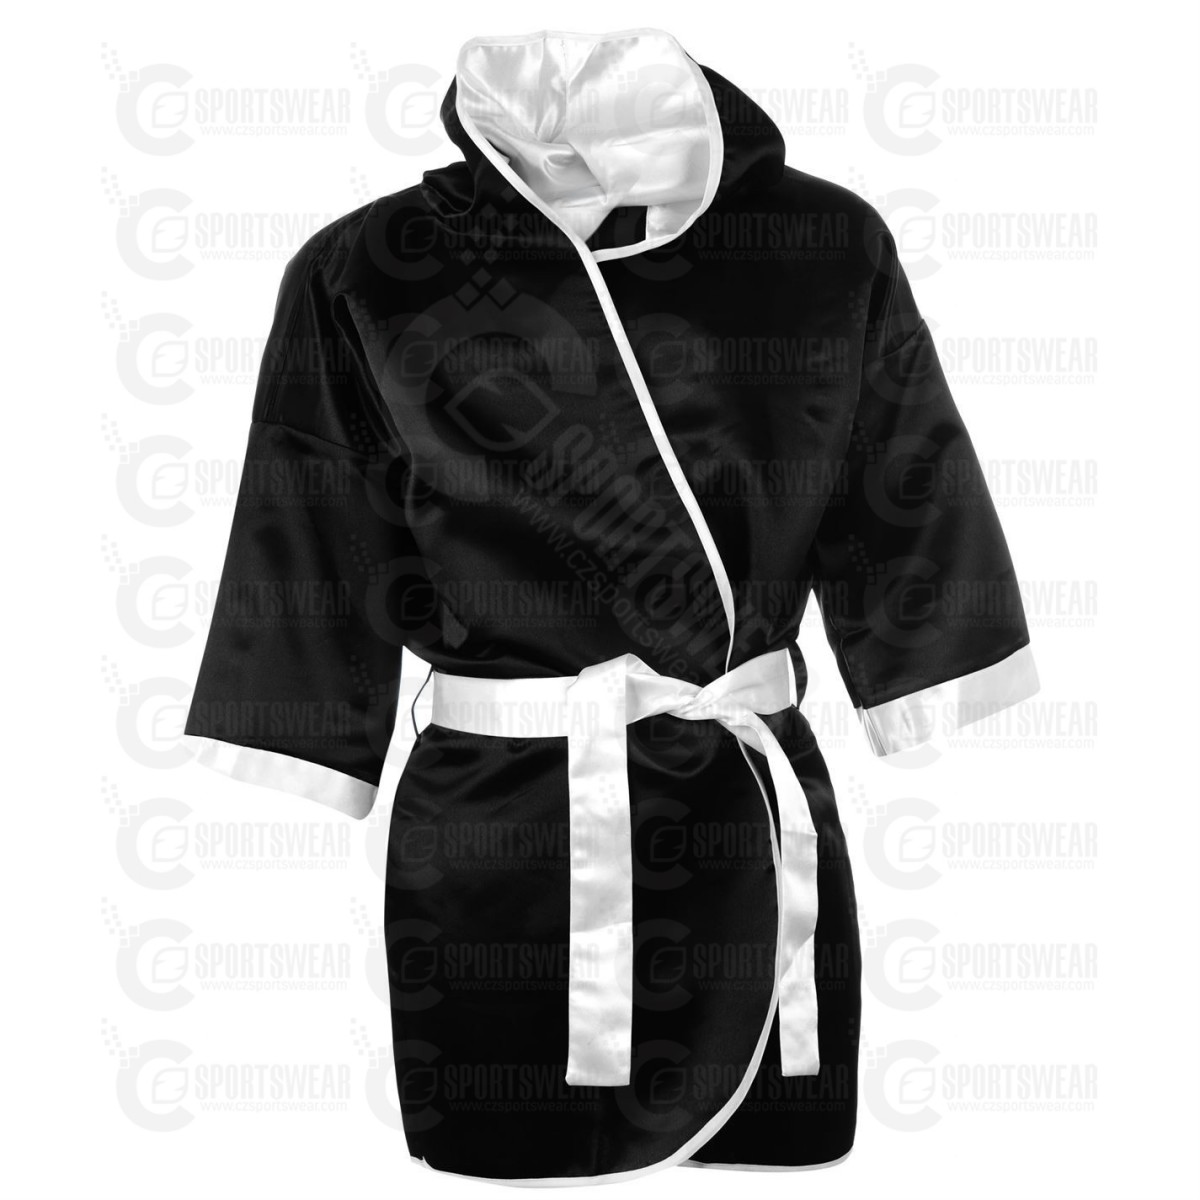 Custom Boxing Robe 